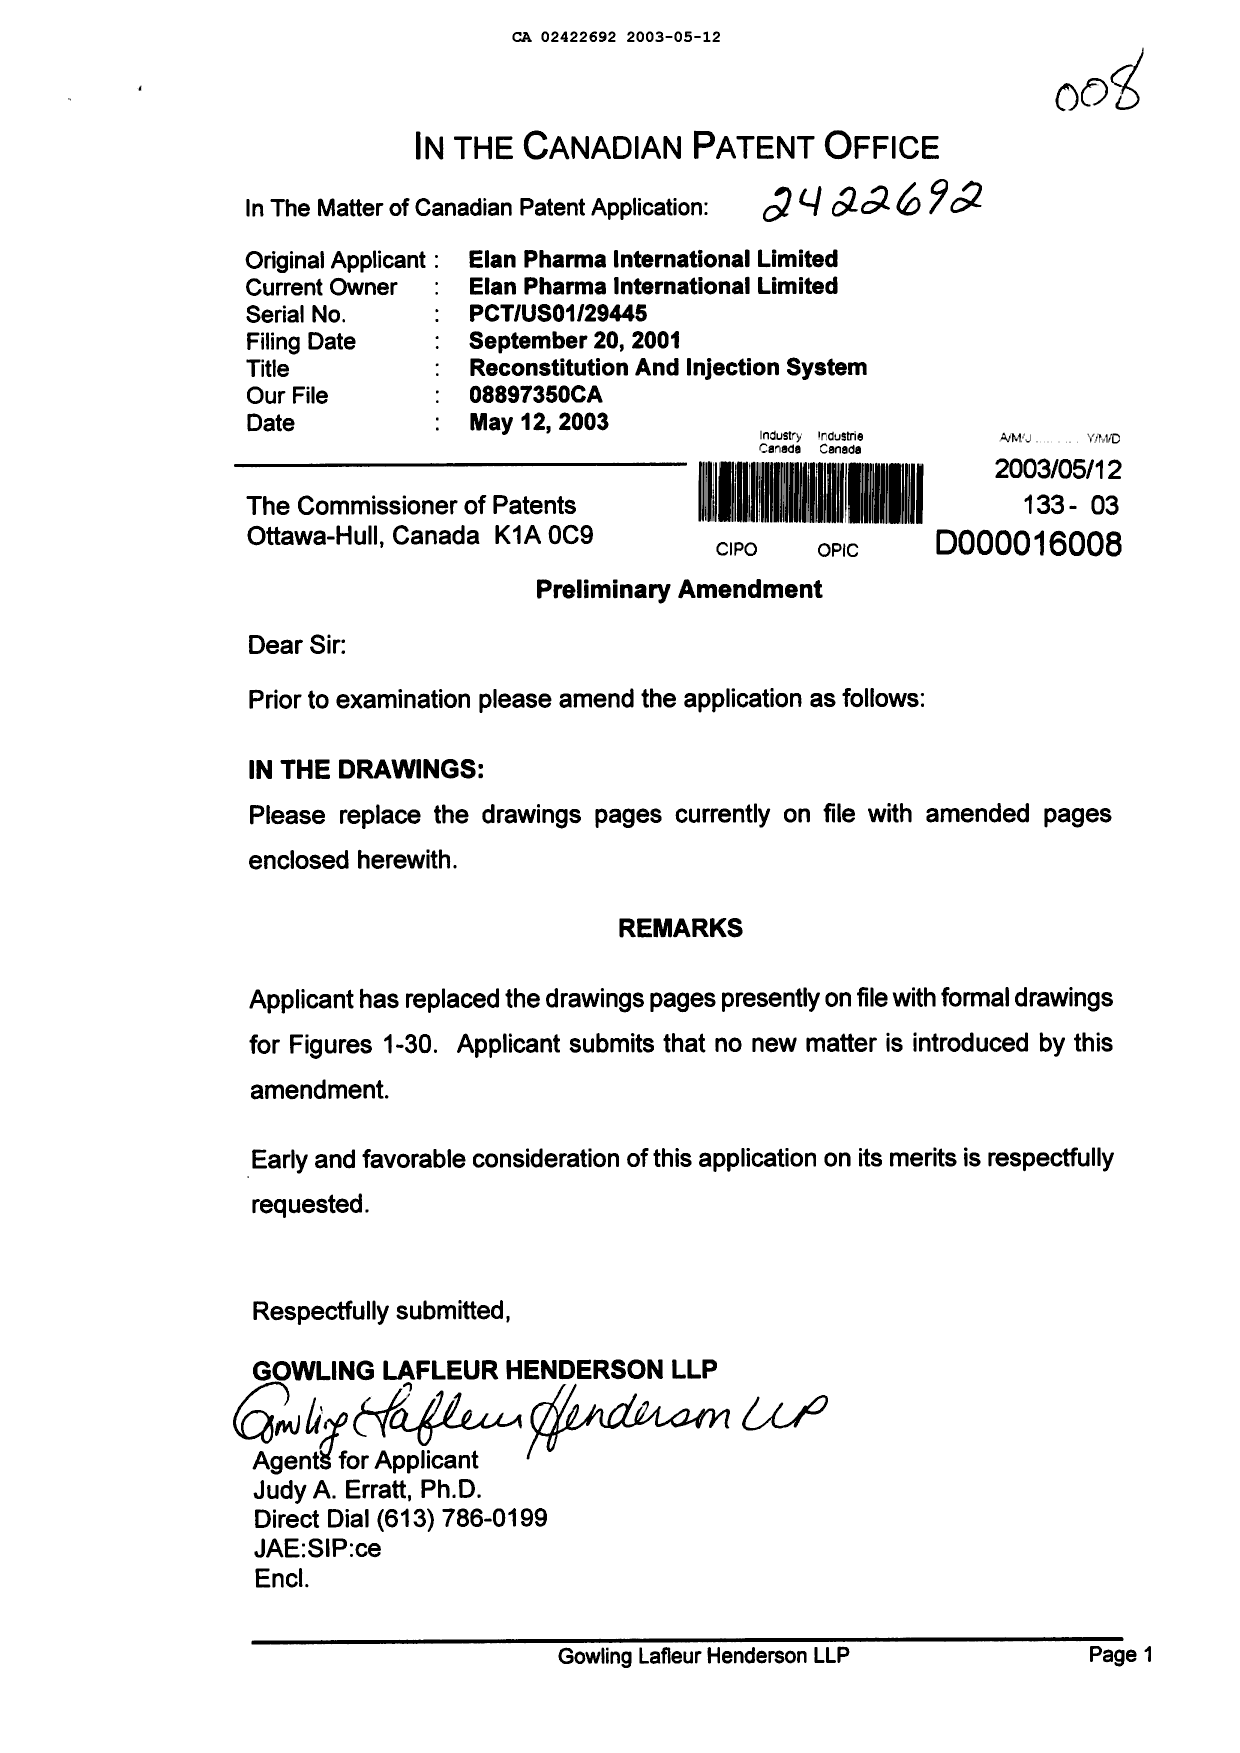 Canadian Patent Document 2422692. Prosecution-Amendment 20030512. Image 1 of 28